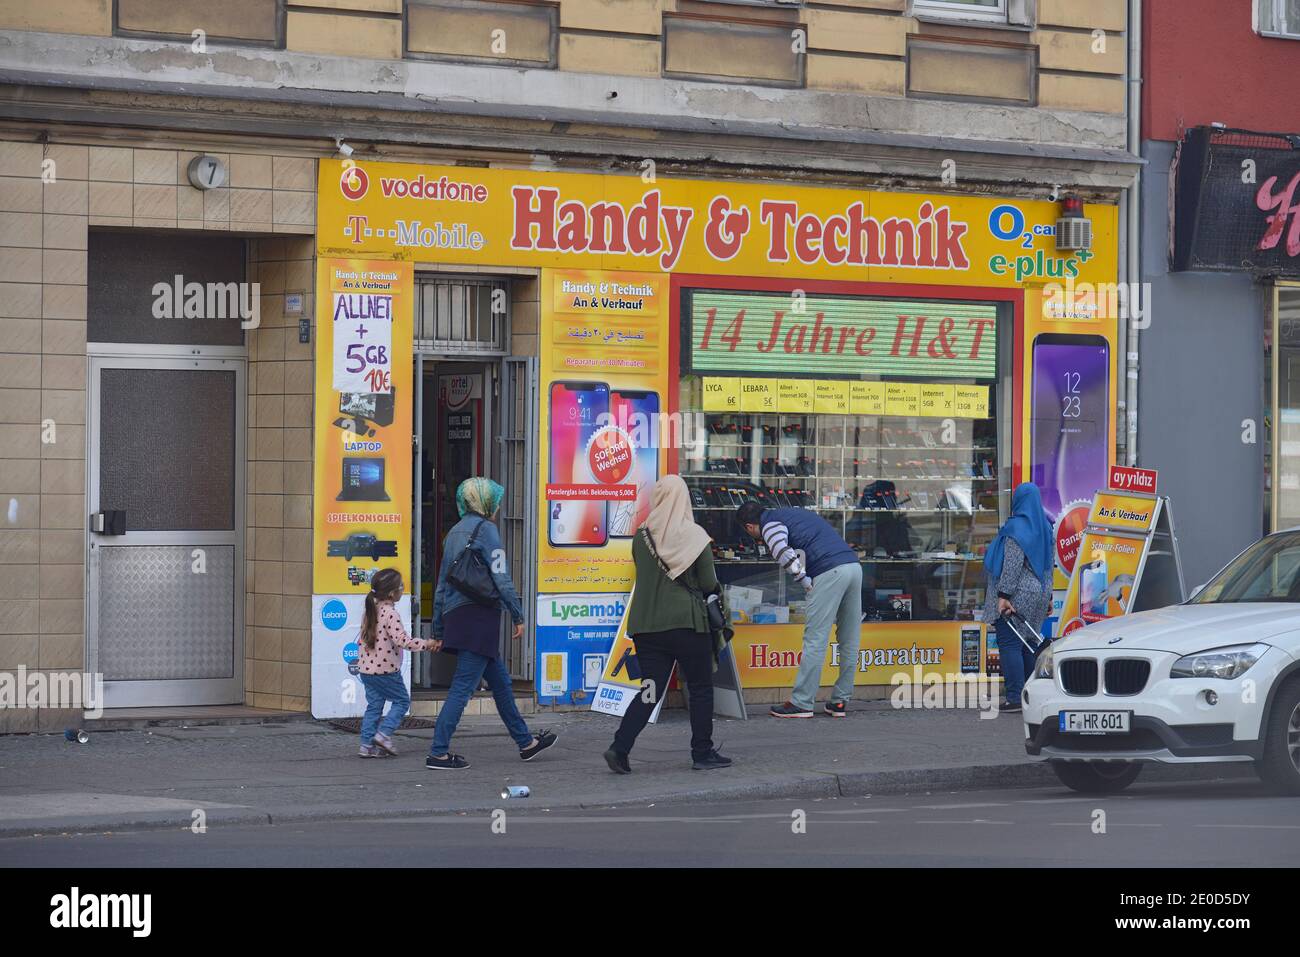 Handyladen, Erkstrasse, Neukoelln, Berlin, Deutschland Stock Photo - Alamy